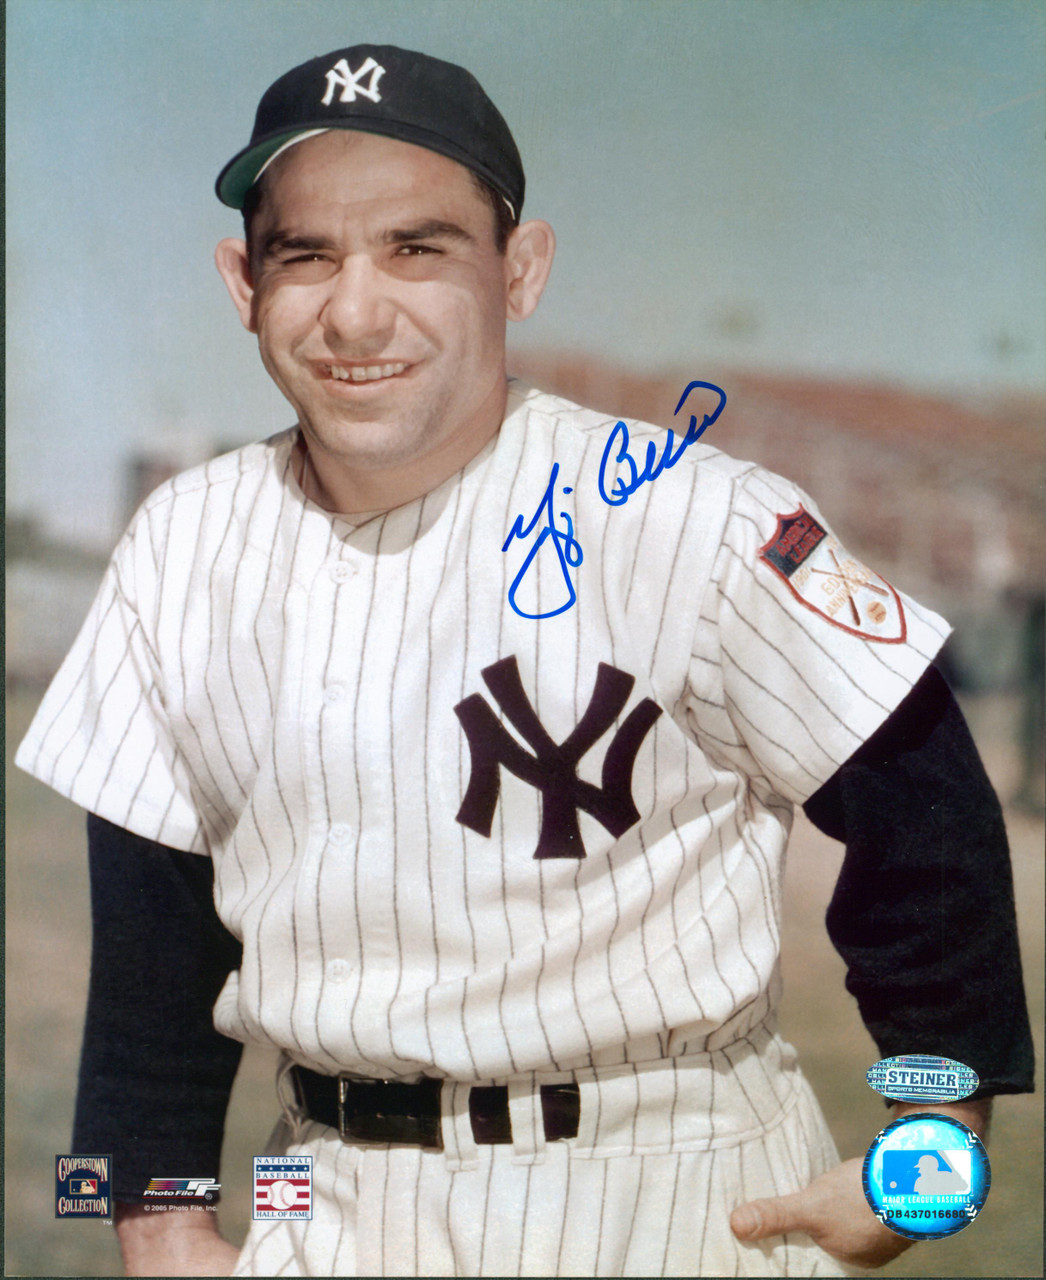 Yogi Berra Signed Card